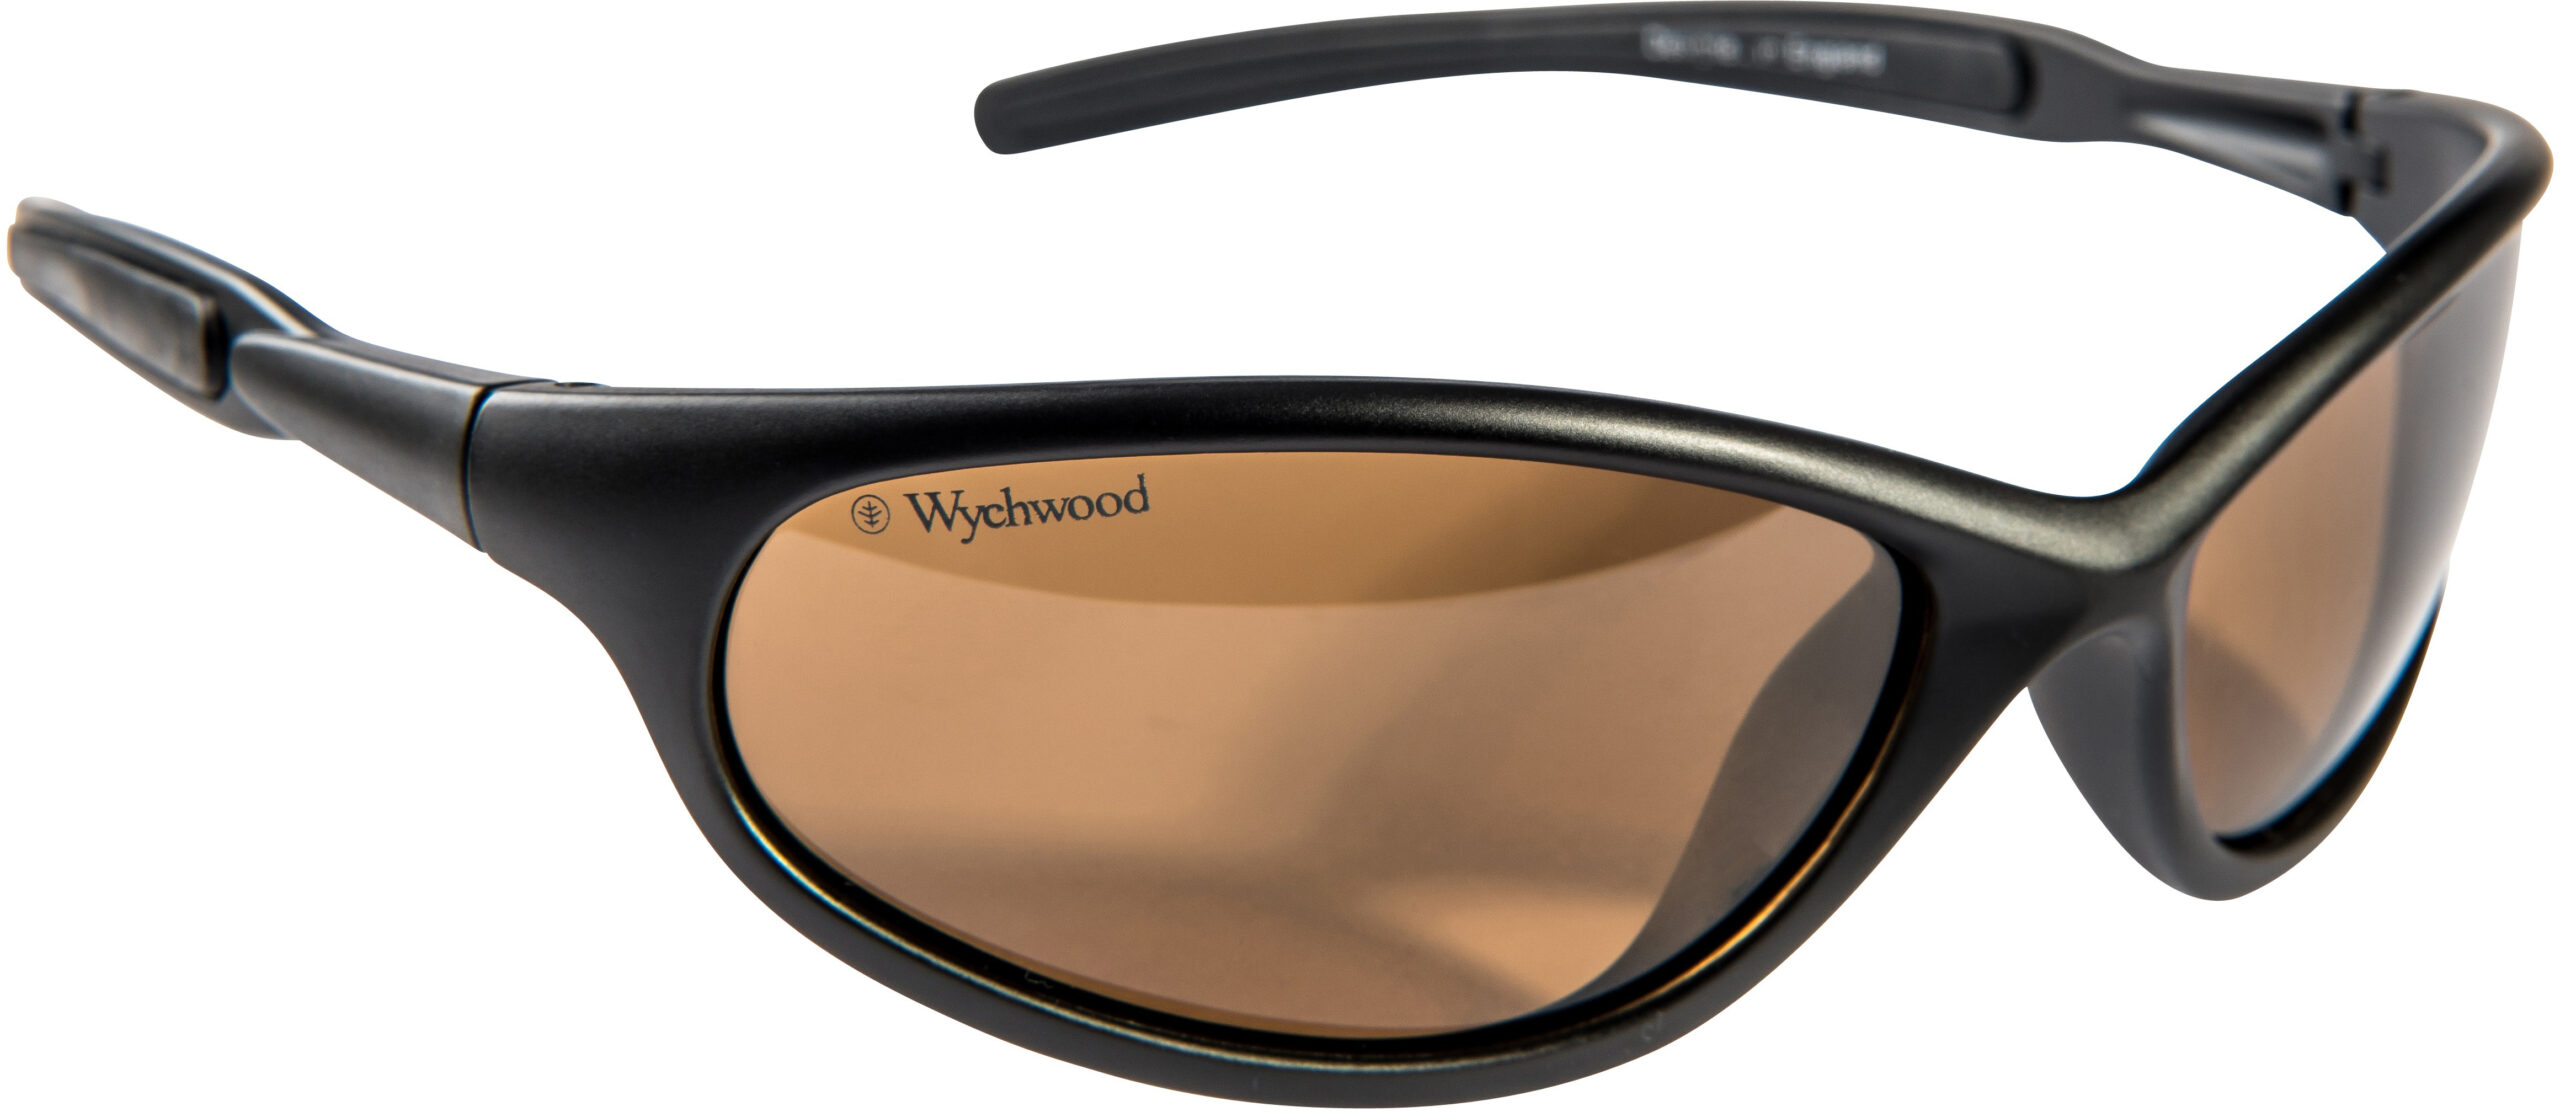 Wychwood Wychwood Tips Brown Lens